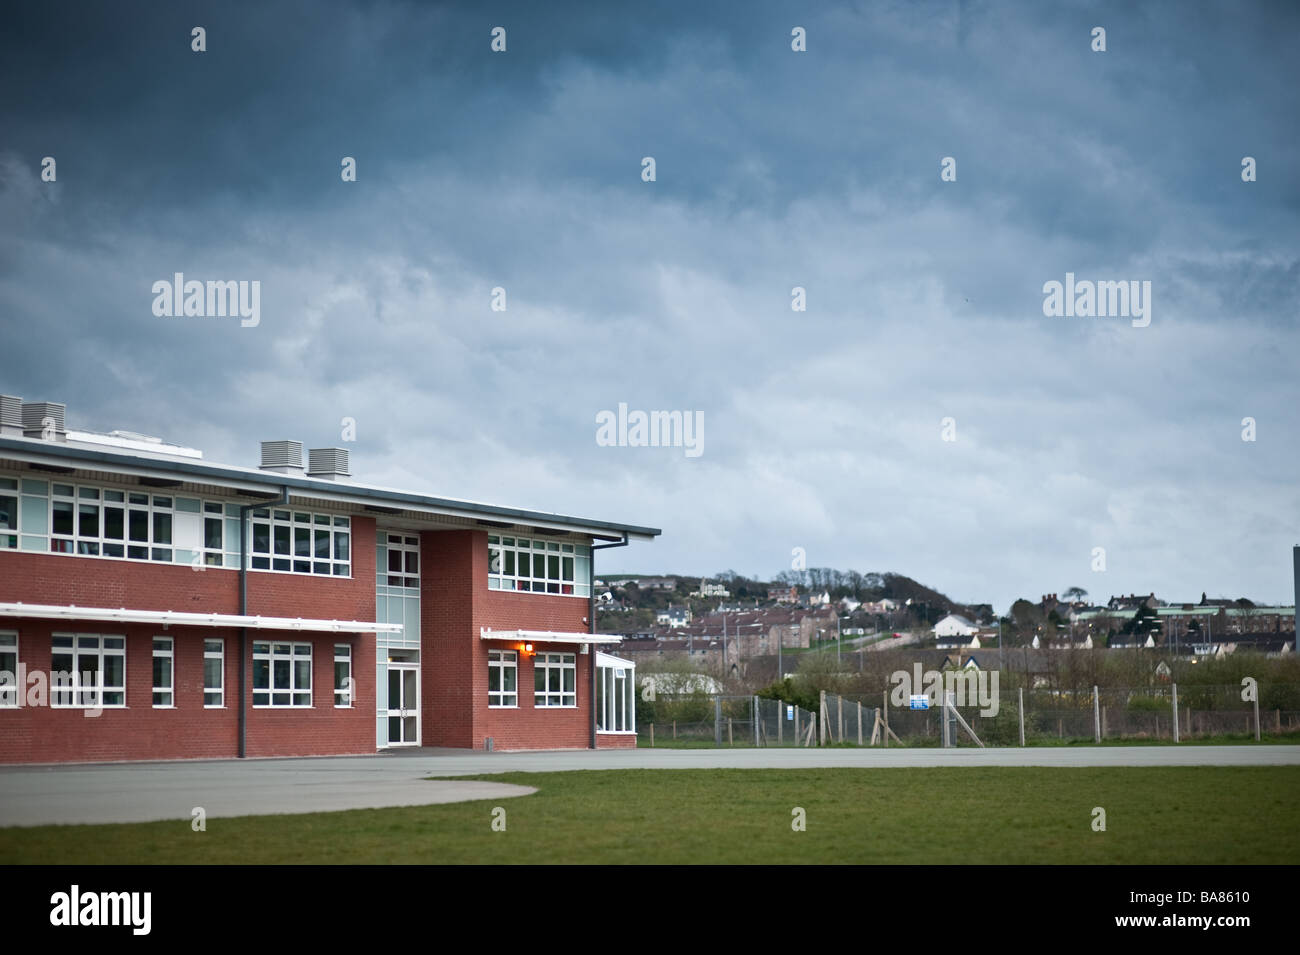 Penweddig welsh medium secondary school built with Private Finance Initiative PFI money Aberystwyth Wales UK Stock Photo